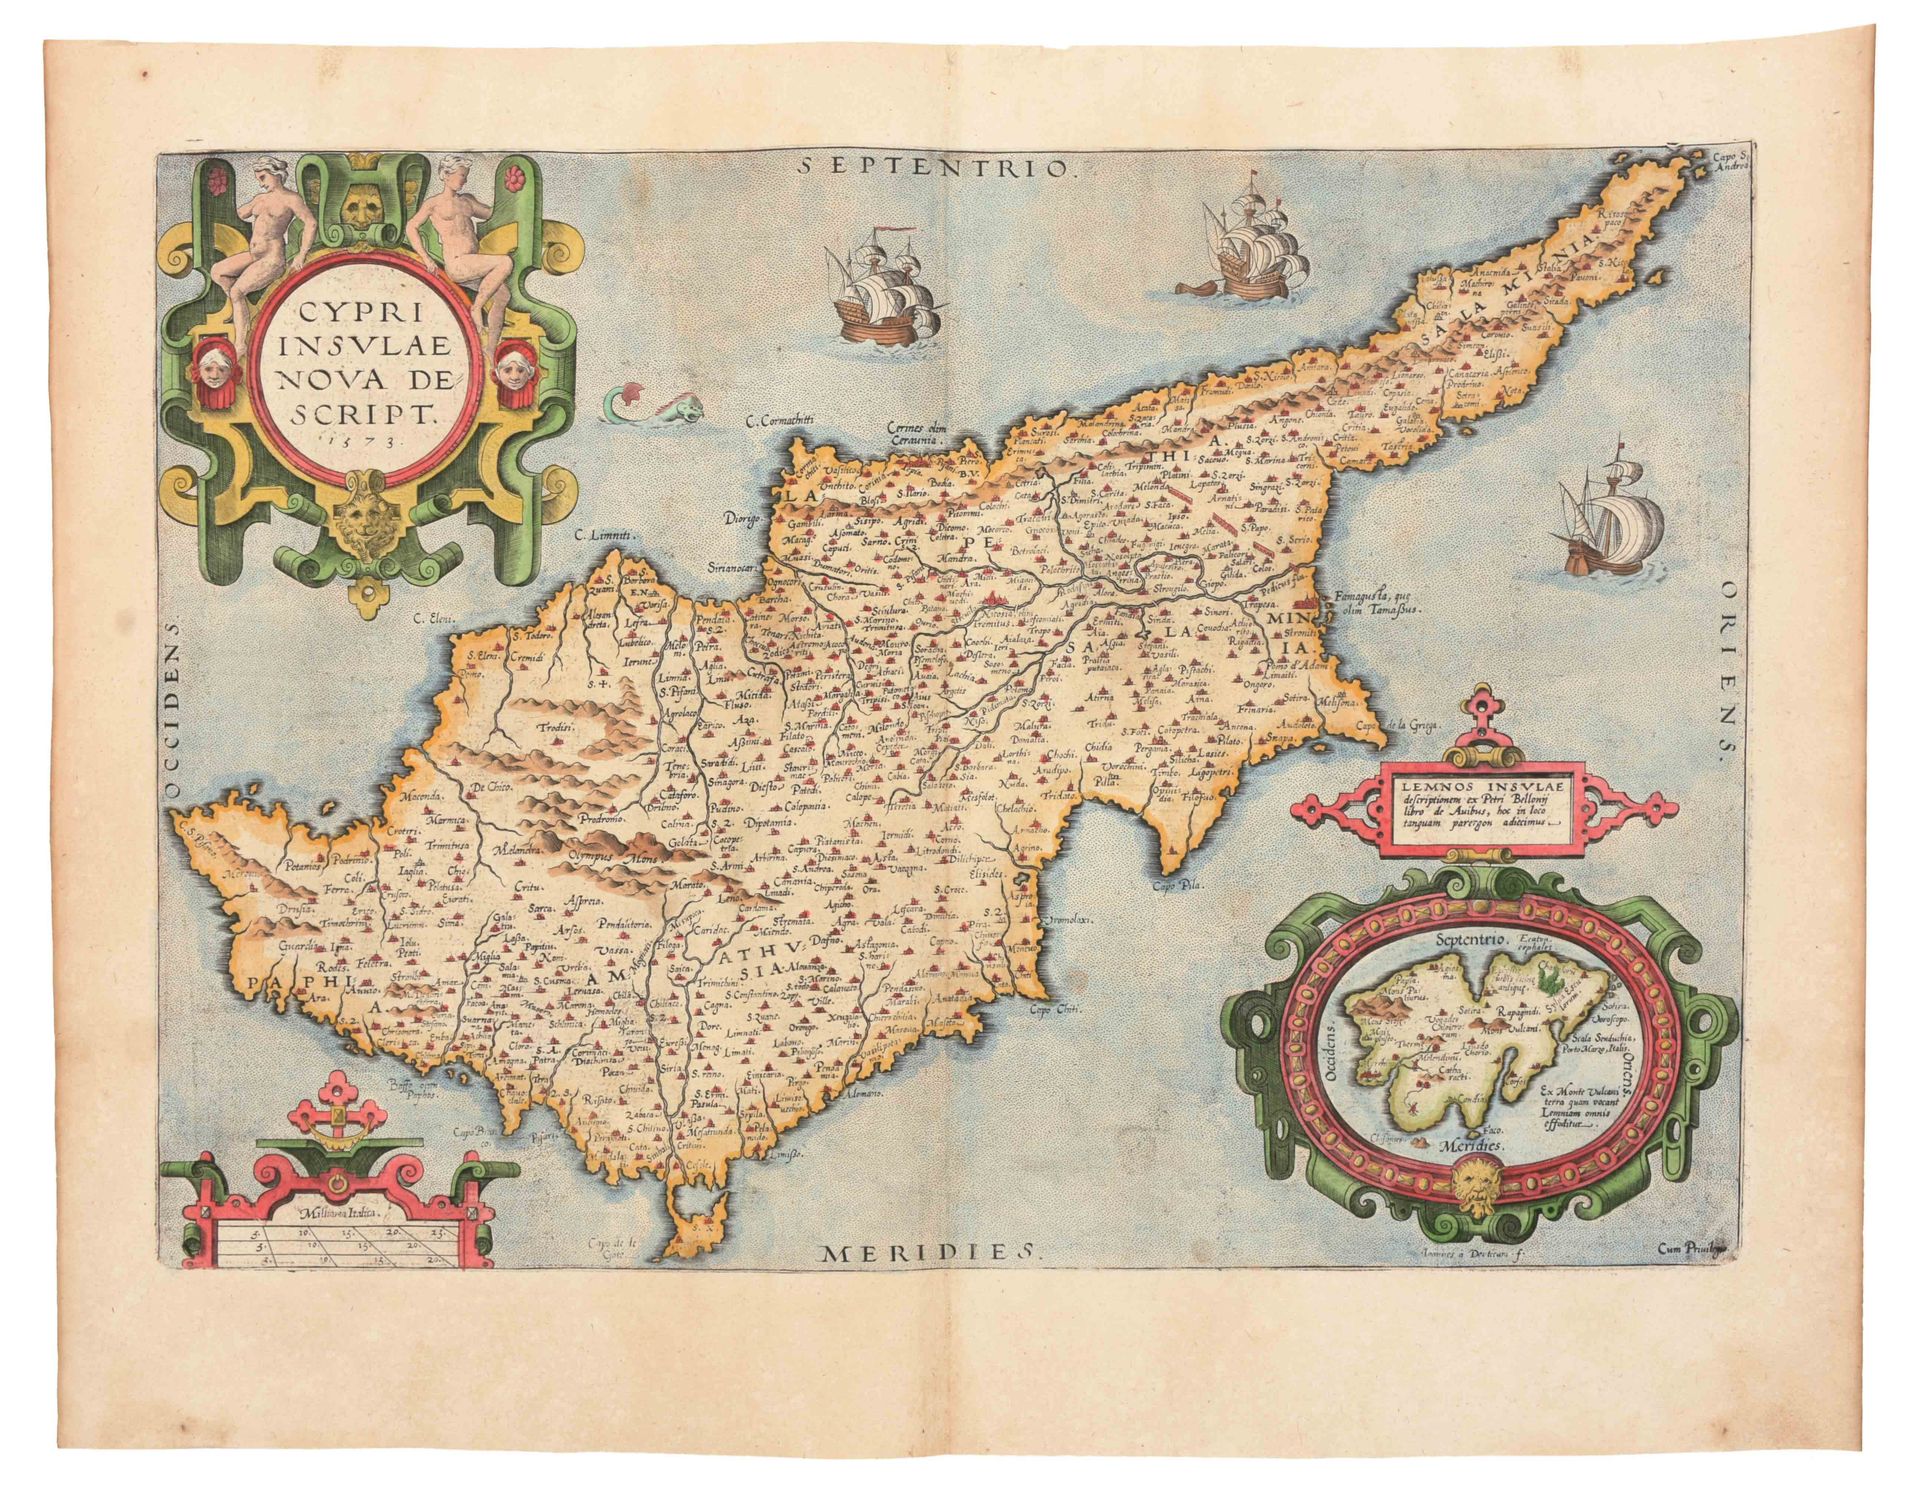 [CYPRUS] Cypri insulae nova descriptio (1573)

Handkolorierte Karte (35 x 50 cm)&hellip;